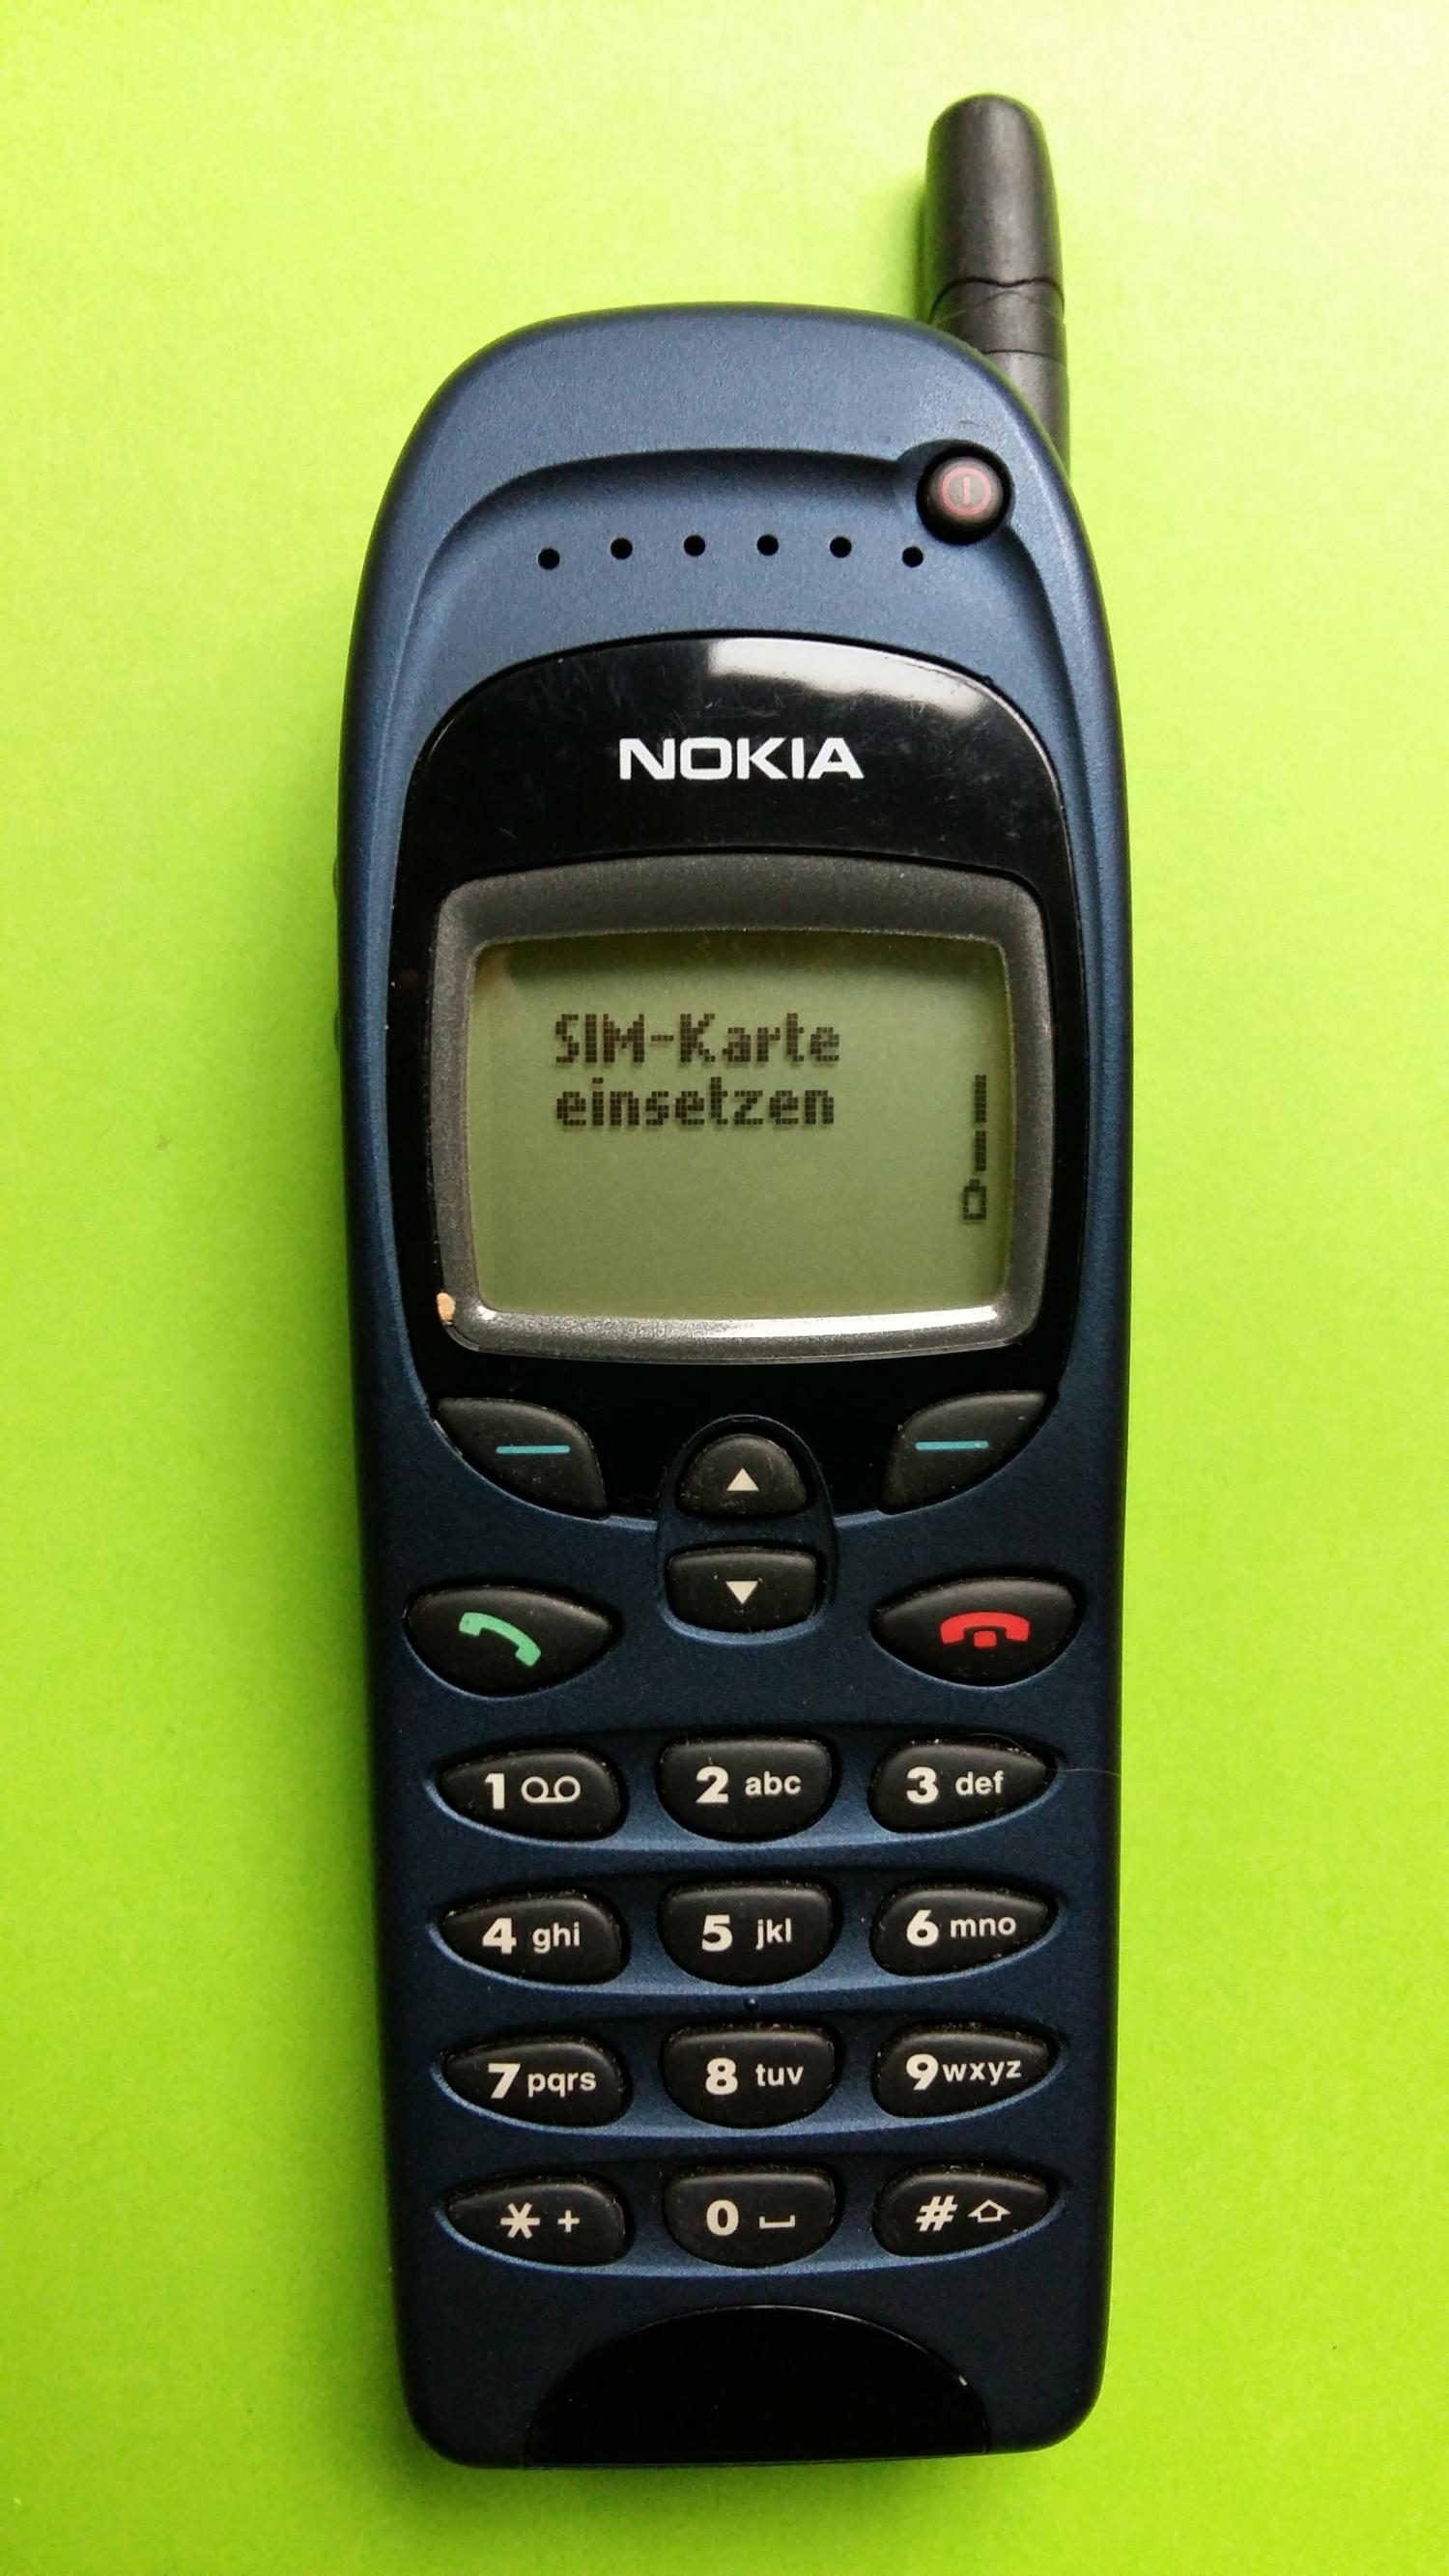 image-7304329-Nokia 6150 Sat (19)1.jpg